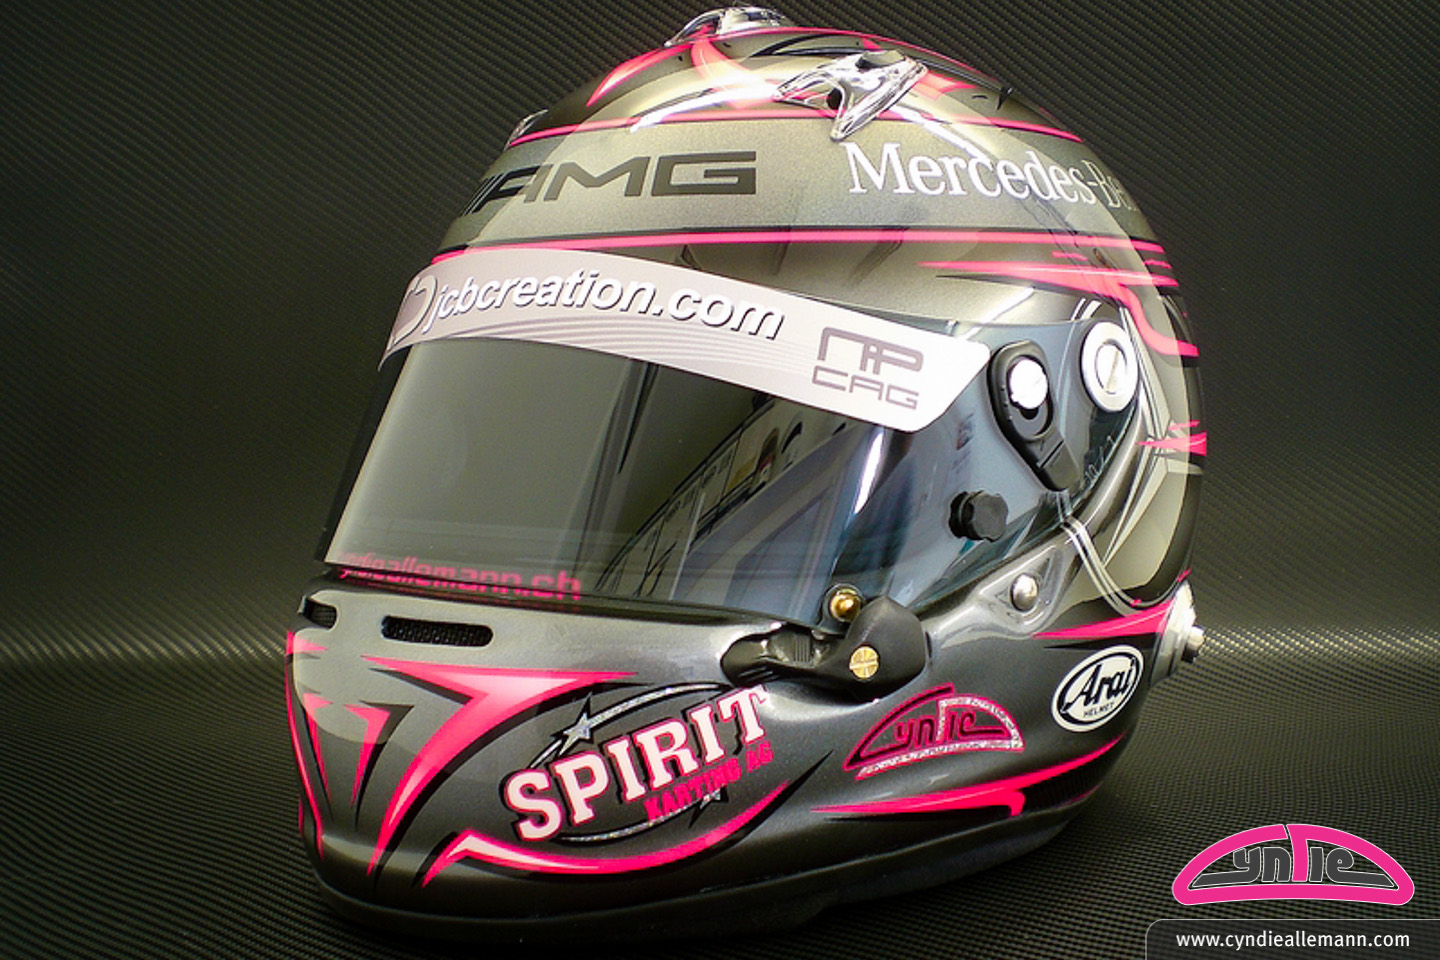 Cyndie helmet, version Mercedes-AMG 2013